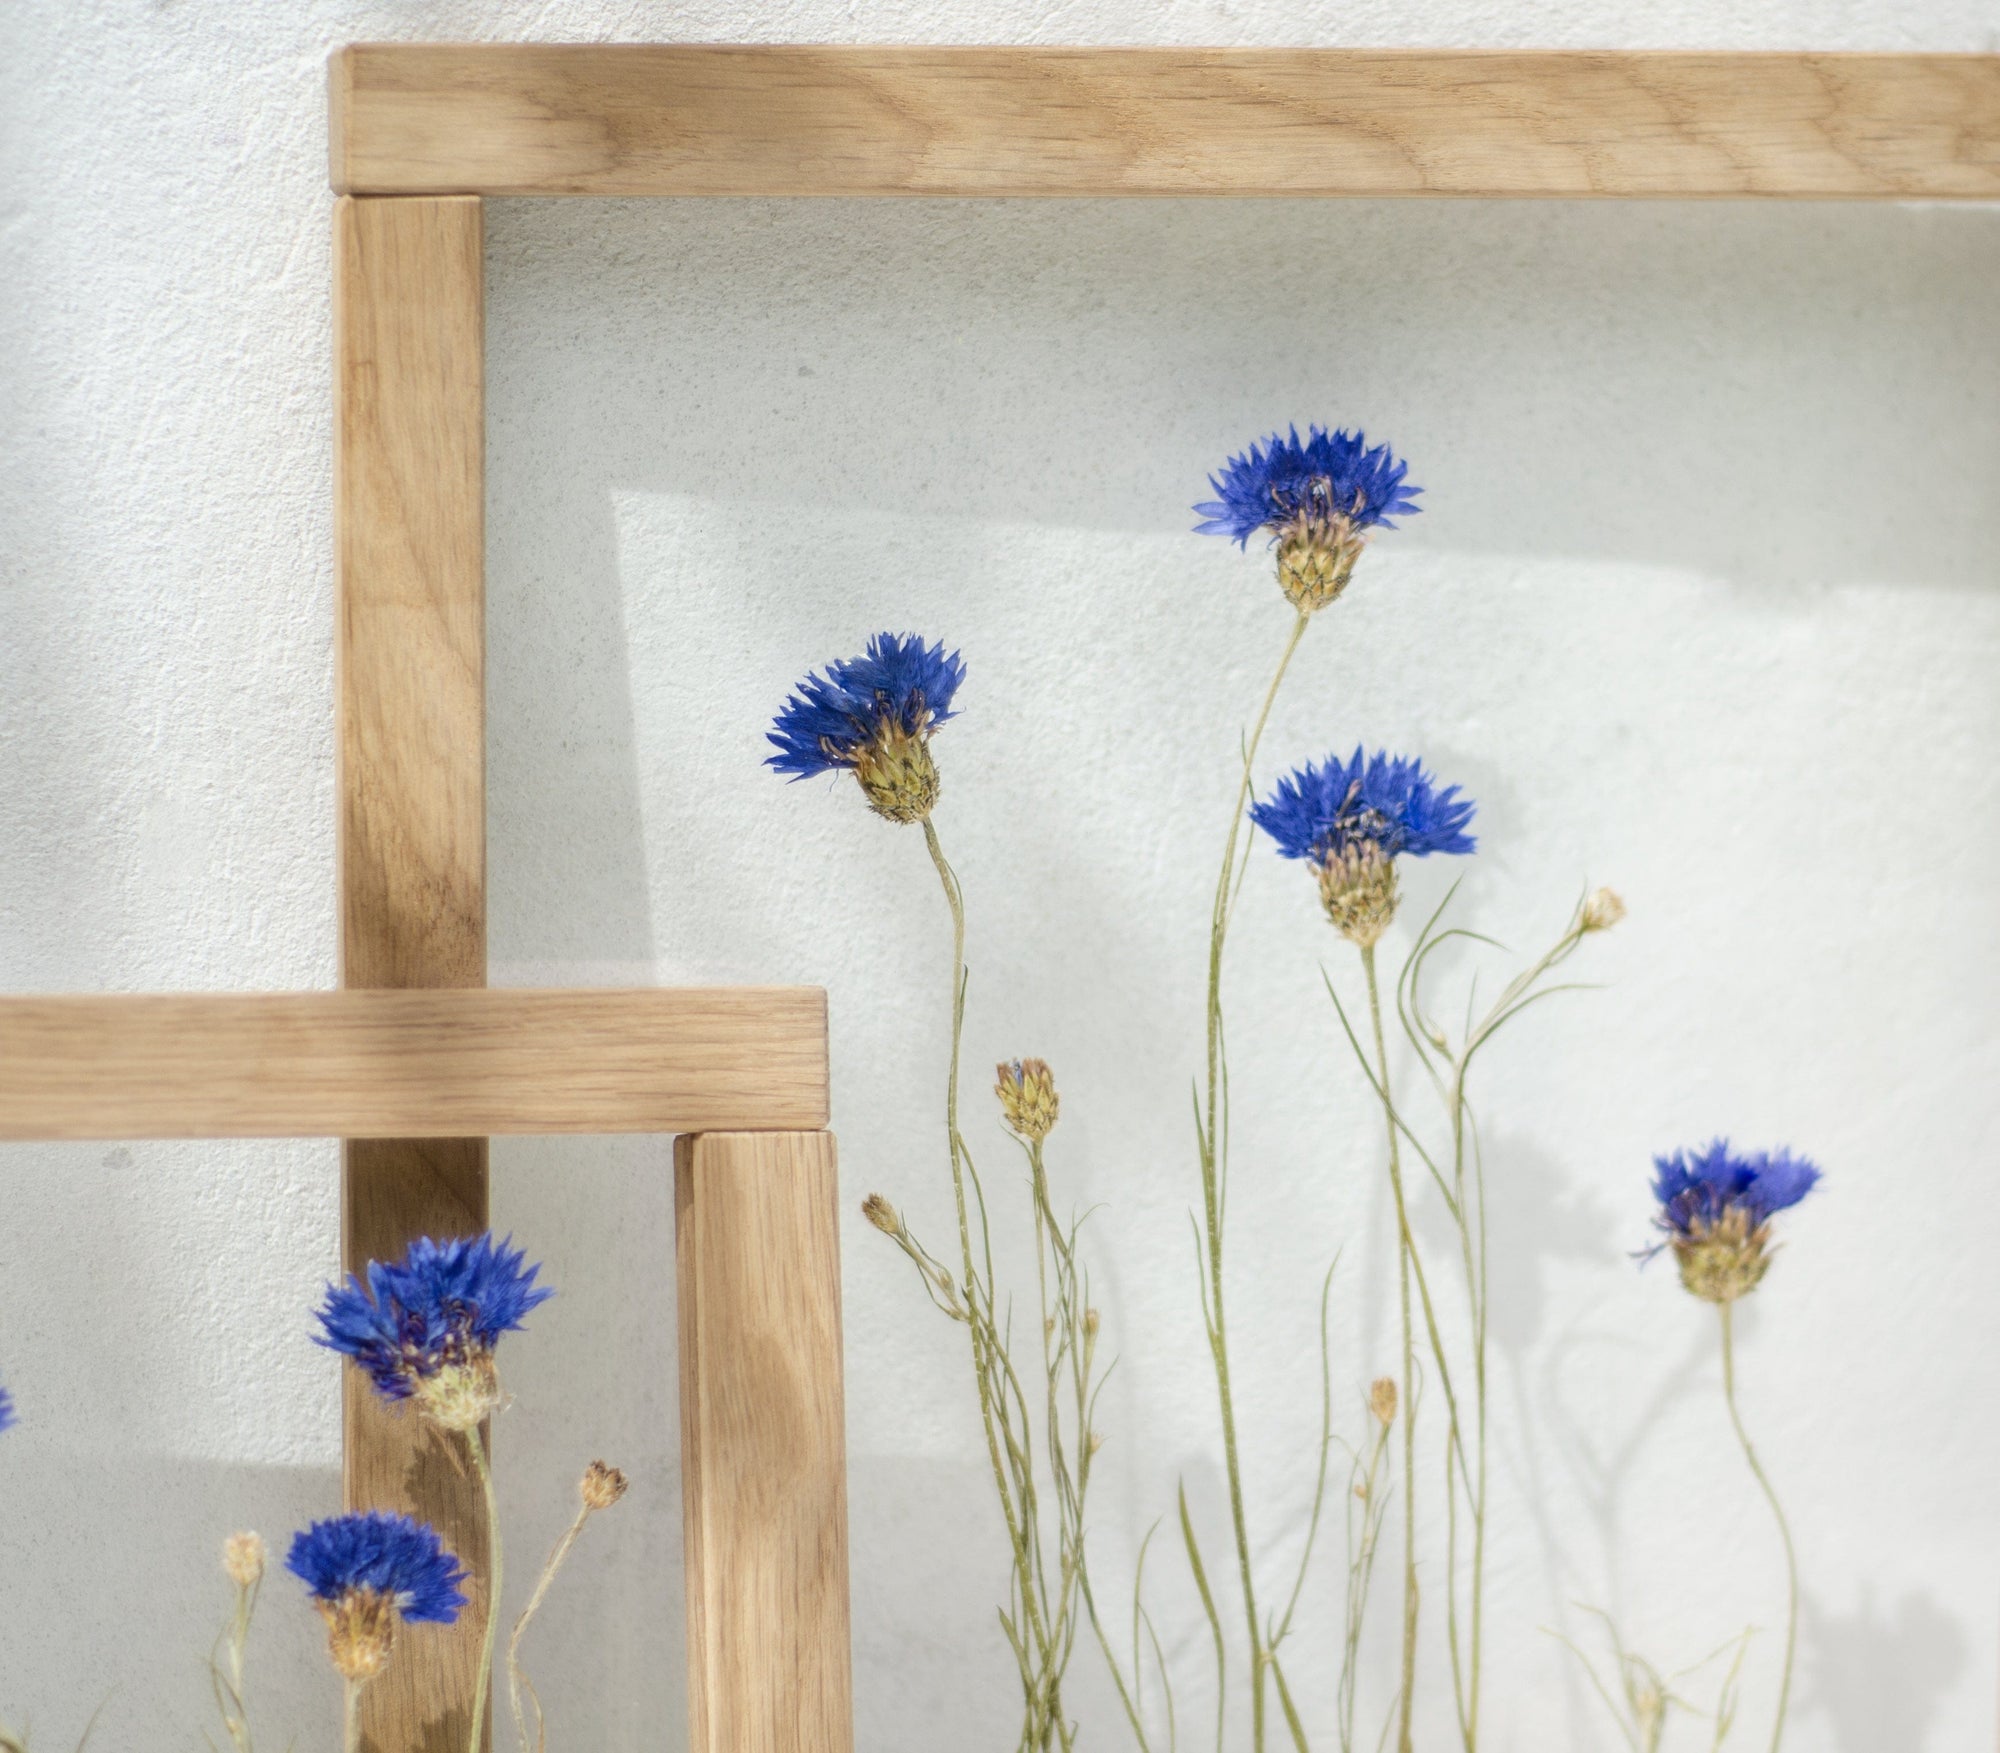 Pressed Flower Framed Art Picture Wood Frame Pressed Flowers and Ferns